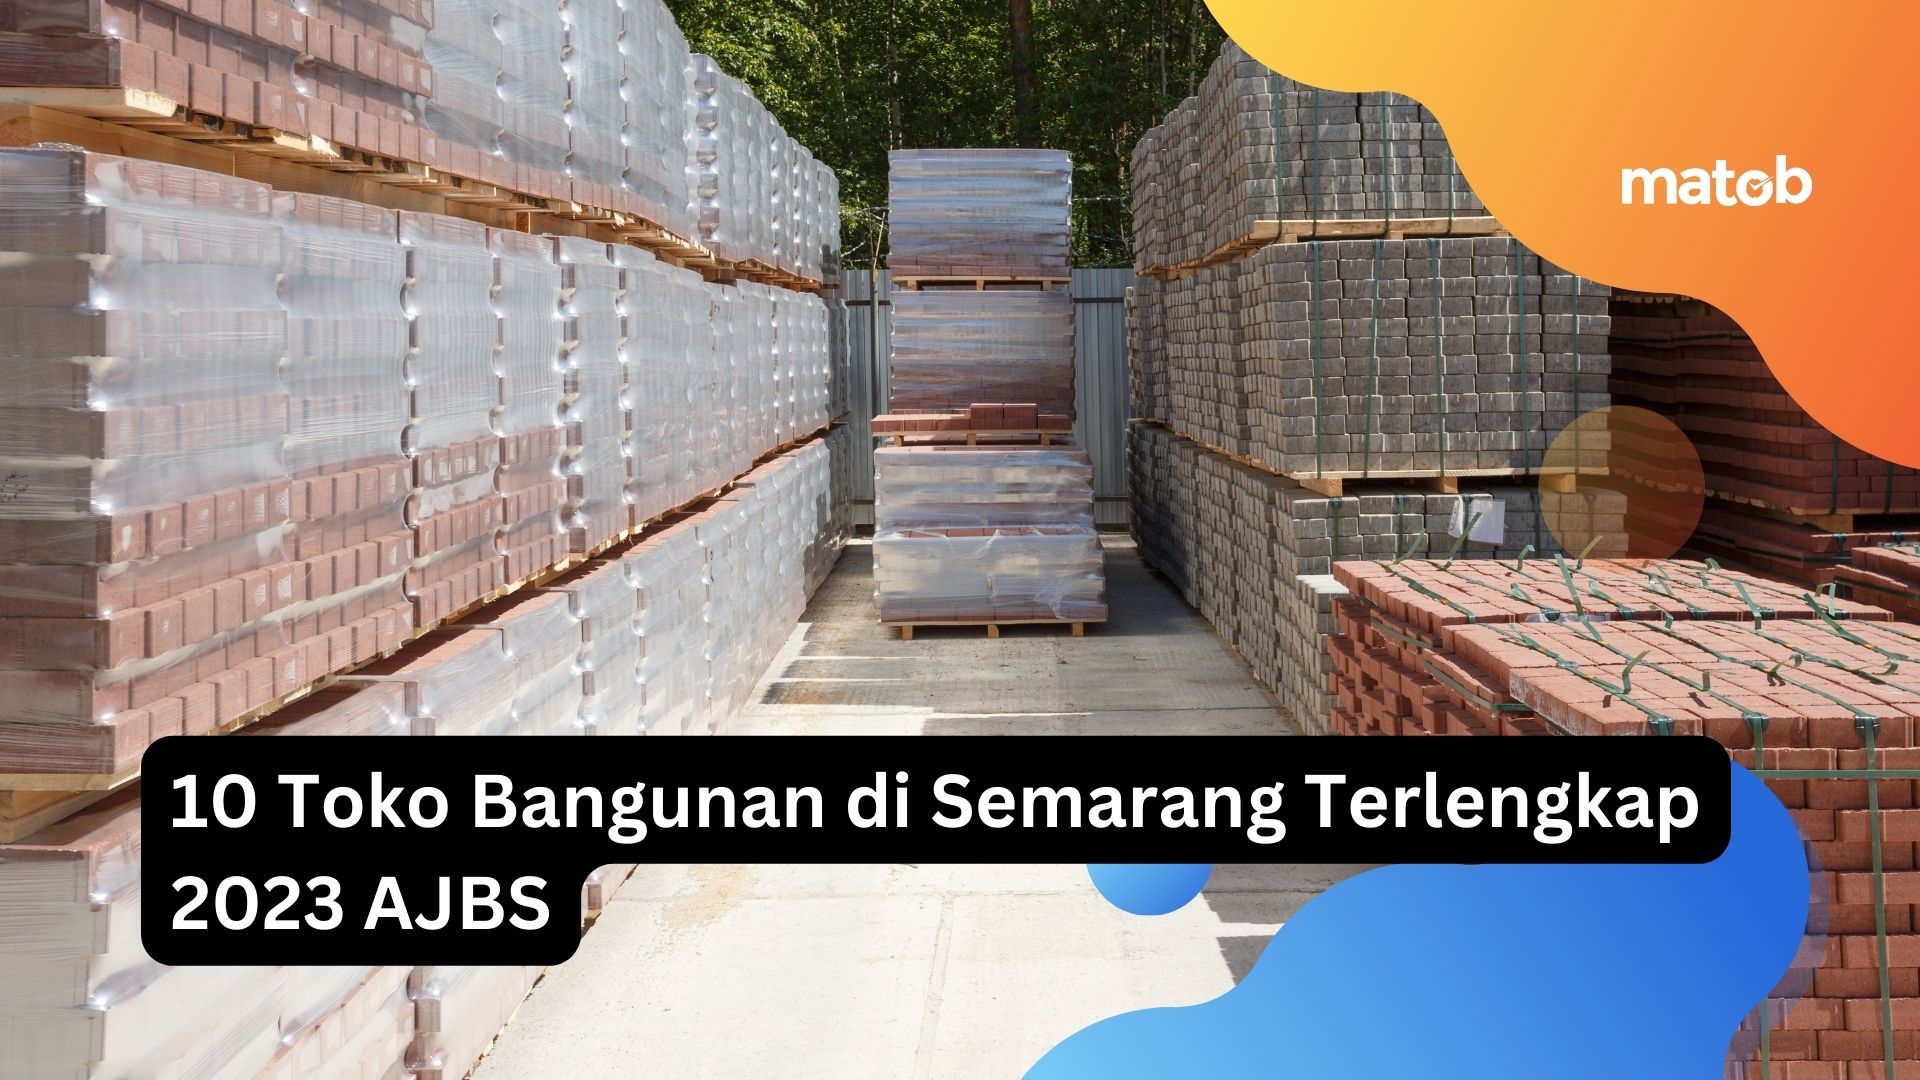 10 Toko Bangunan di Semarang Terlengkap 2023 AJBS